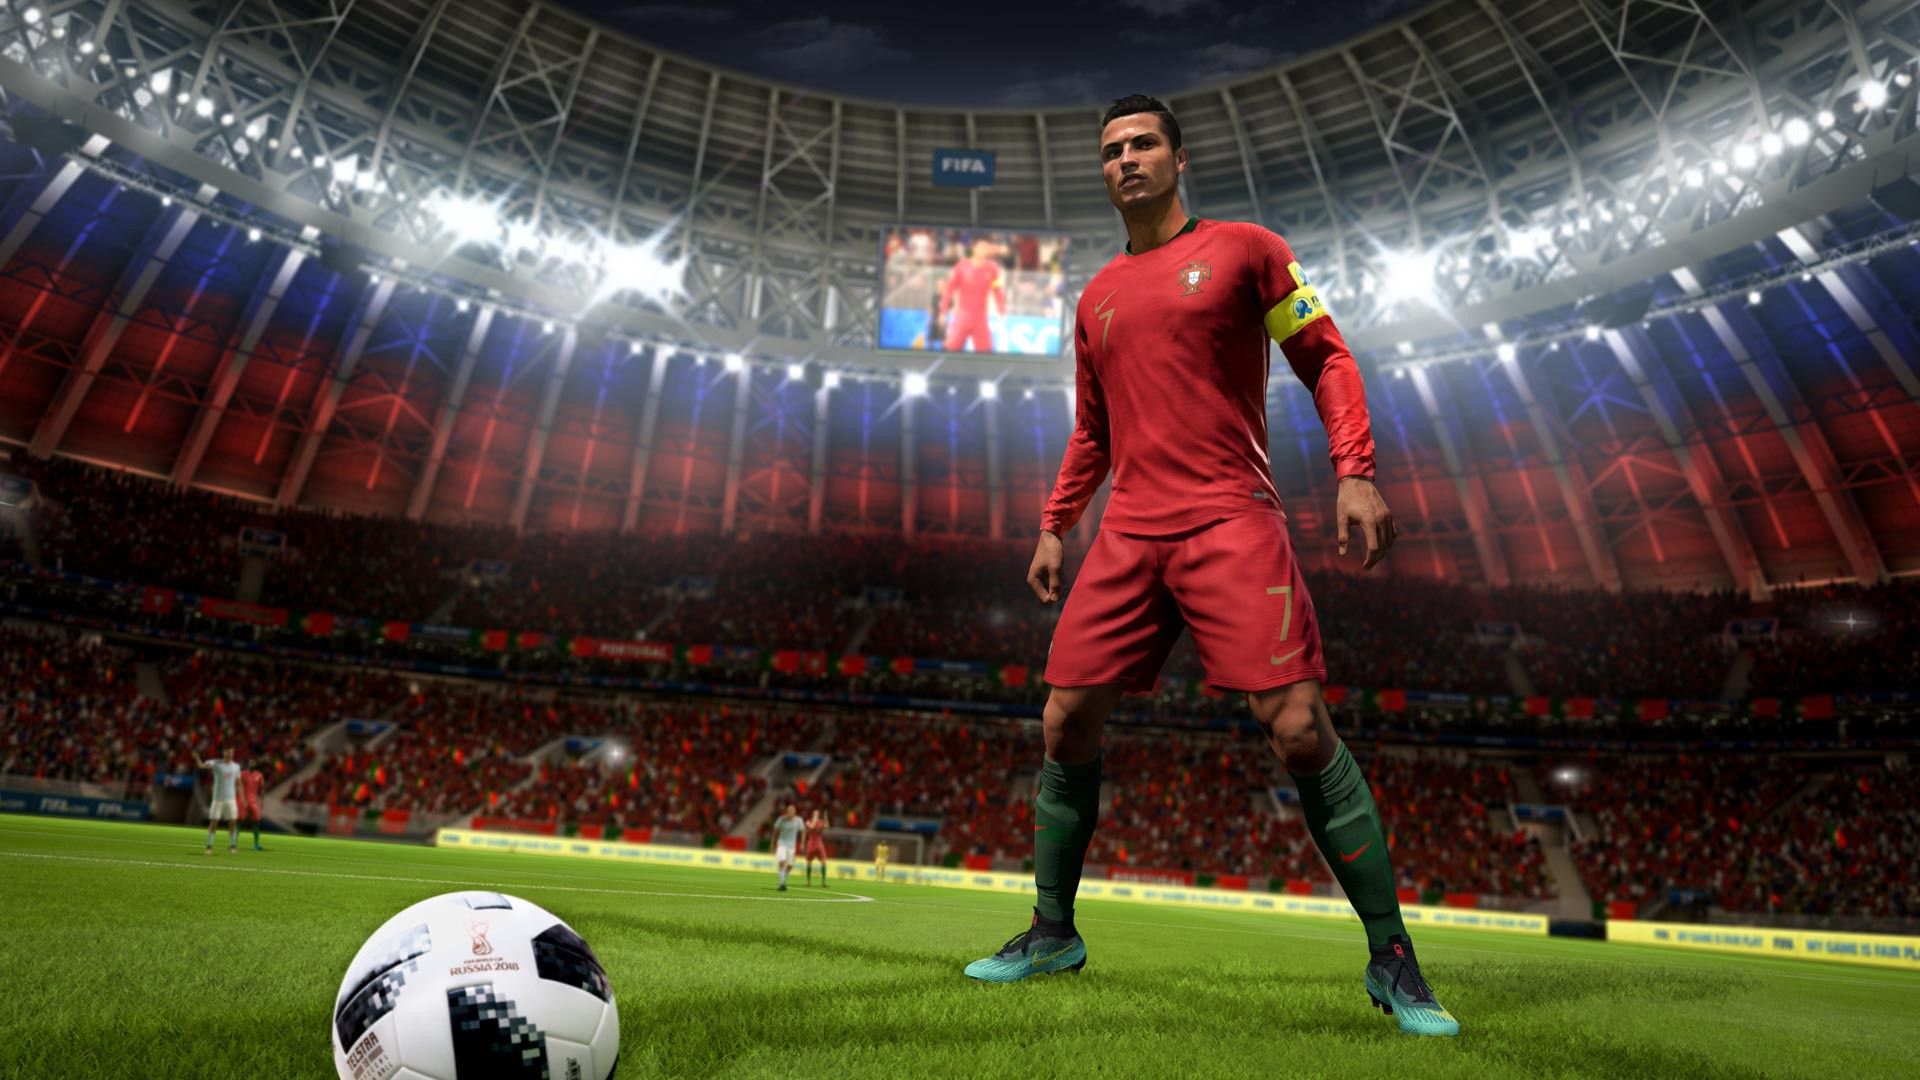 FIFA 18游戏图集